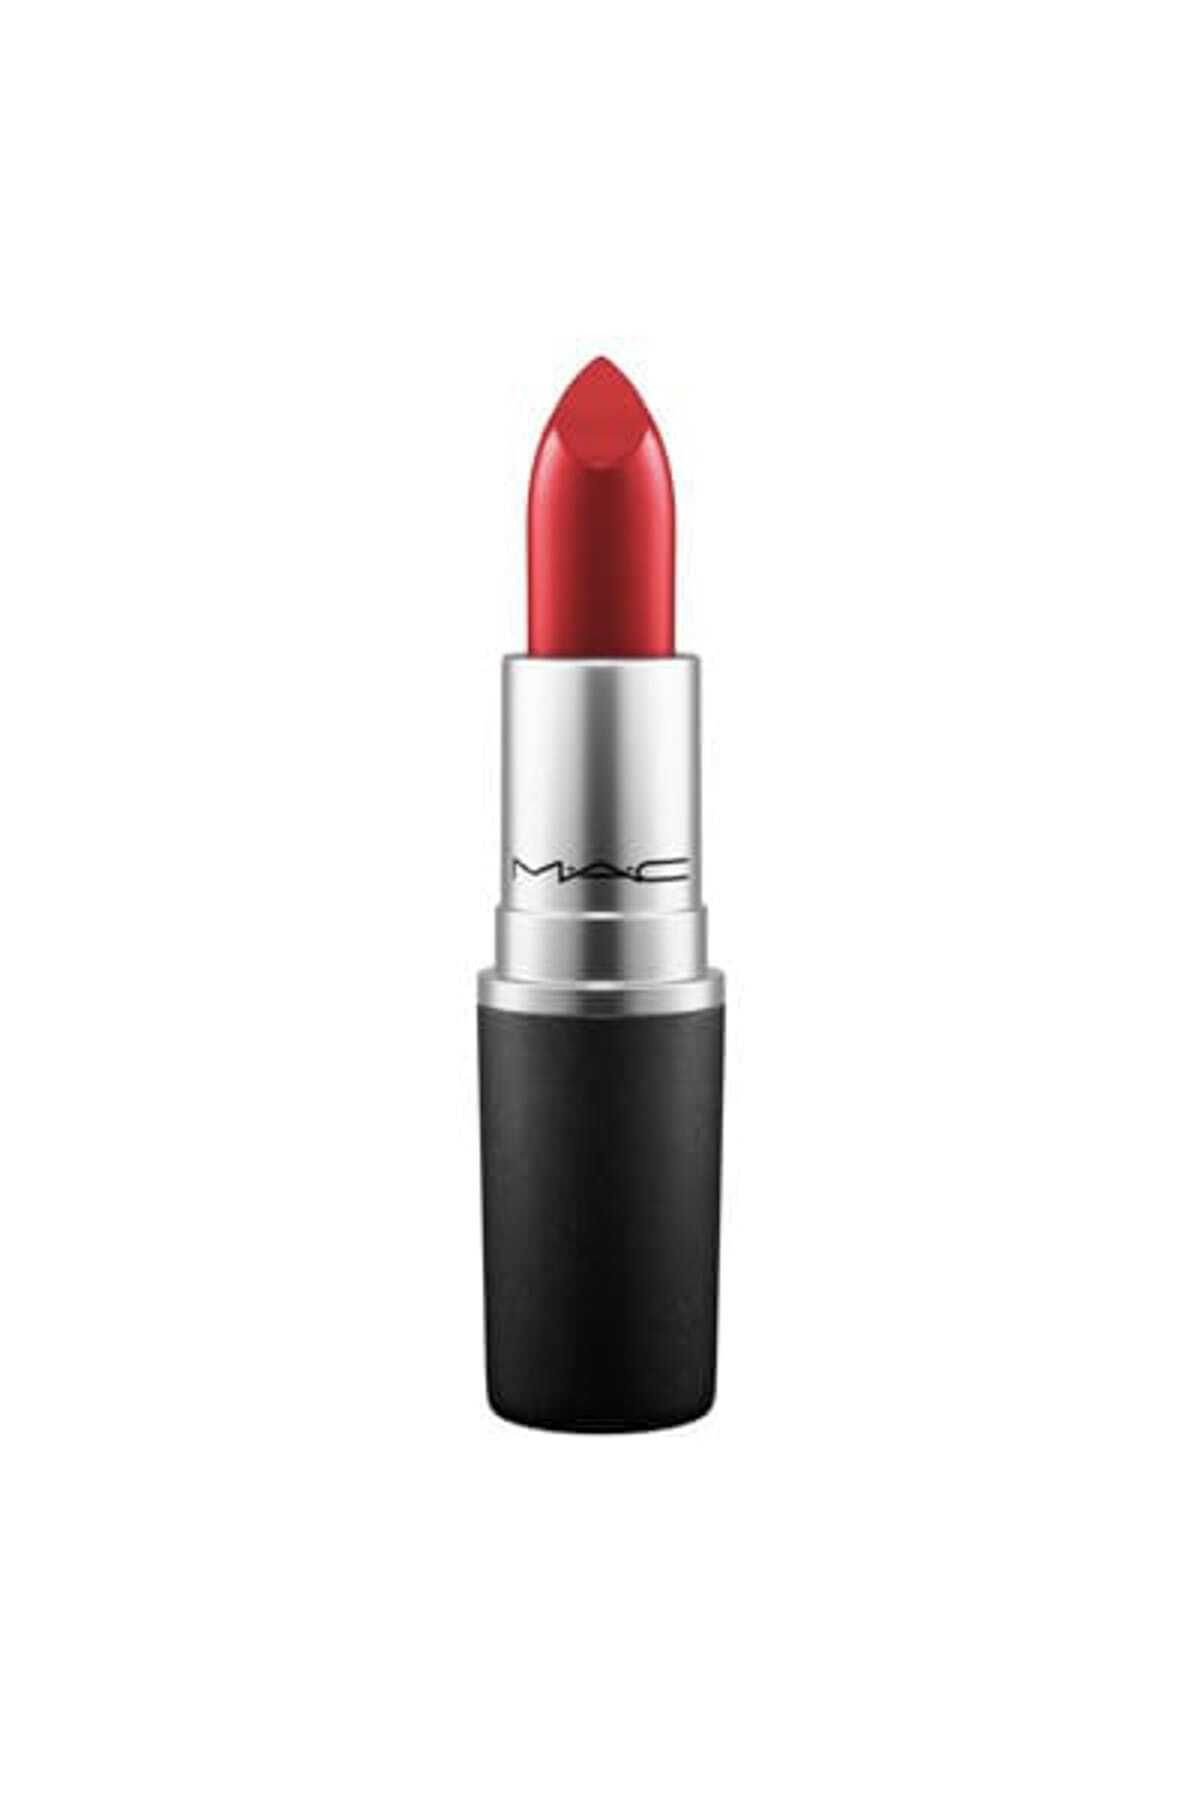 Mac Ruj - Cremesheen Lipstick Dare You 3 g 773602166541